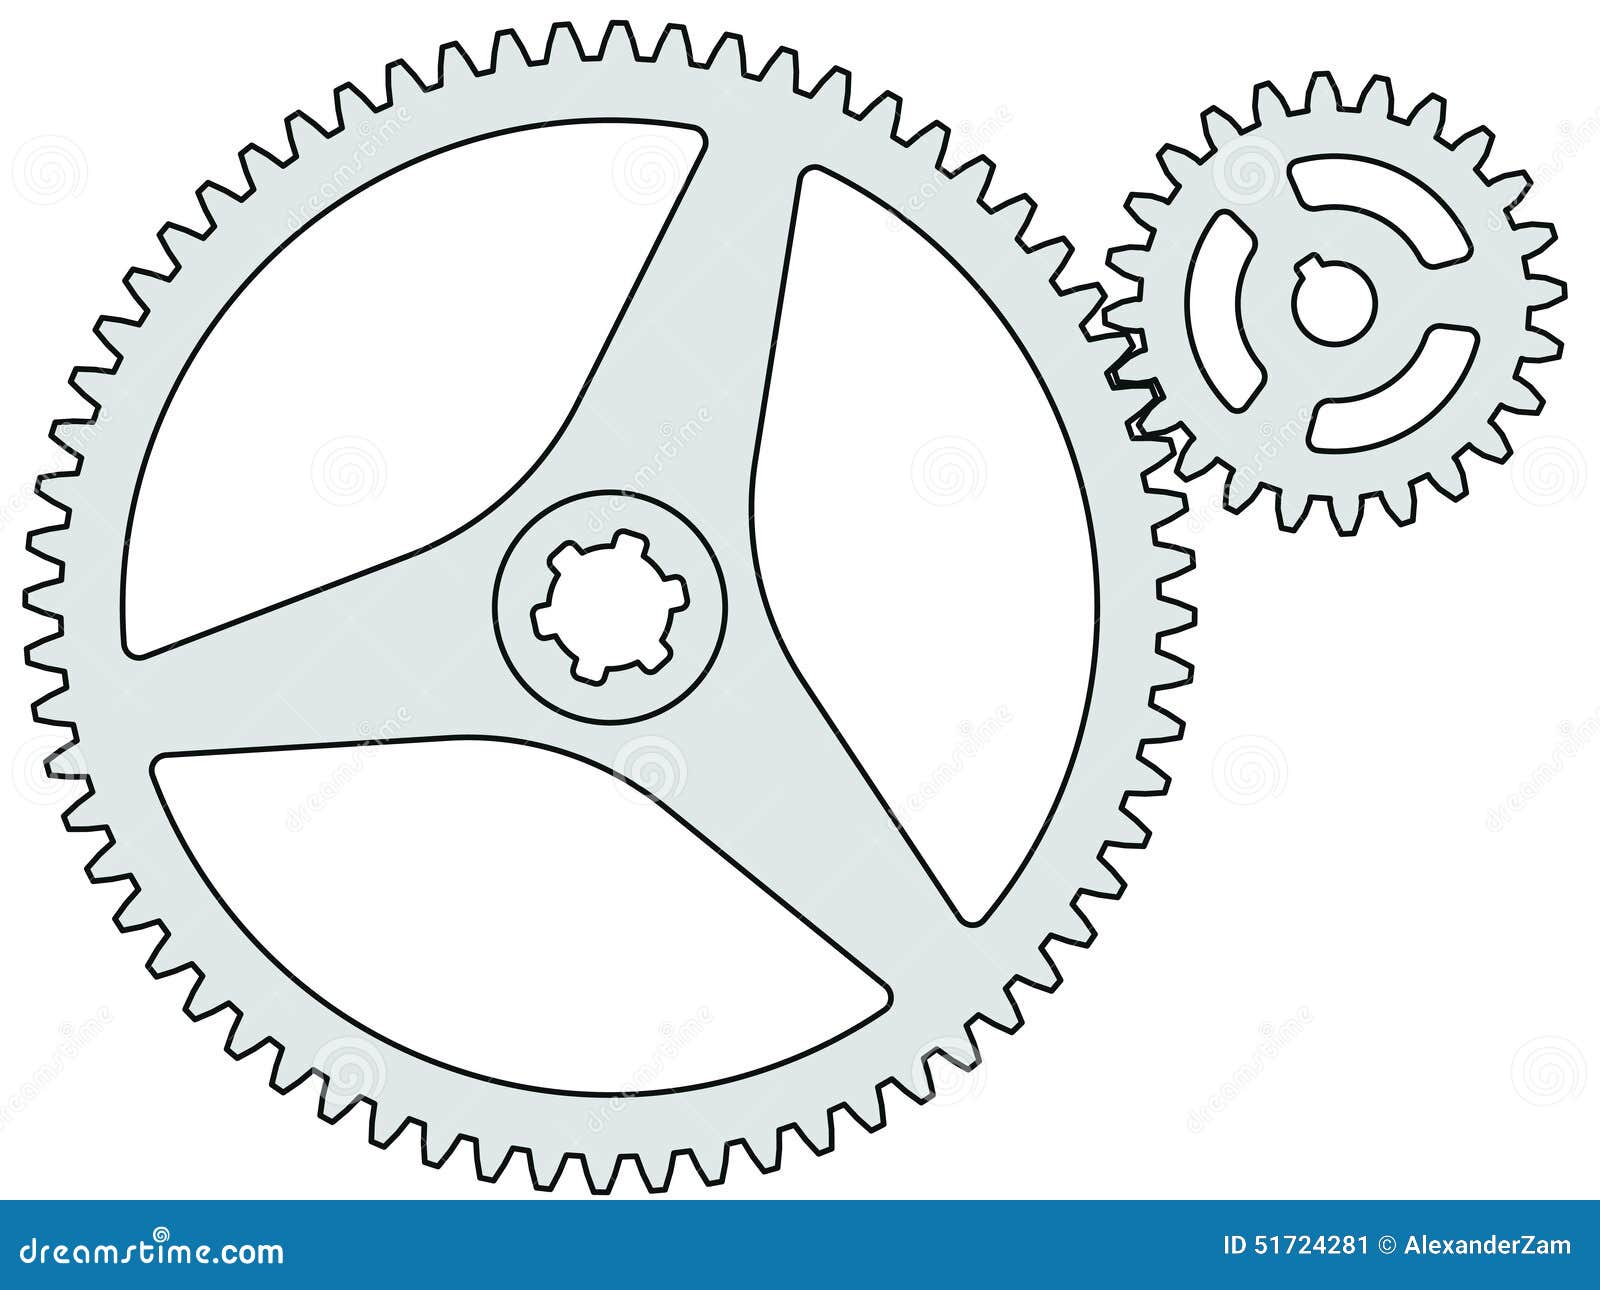 Gear pair stock vector. Illustration of circle, gearing - 51724281